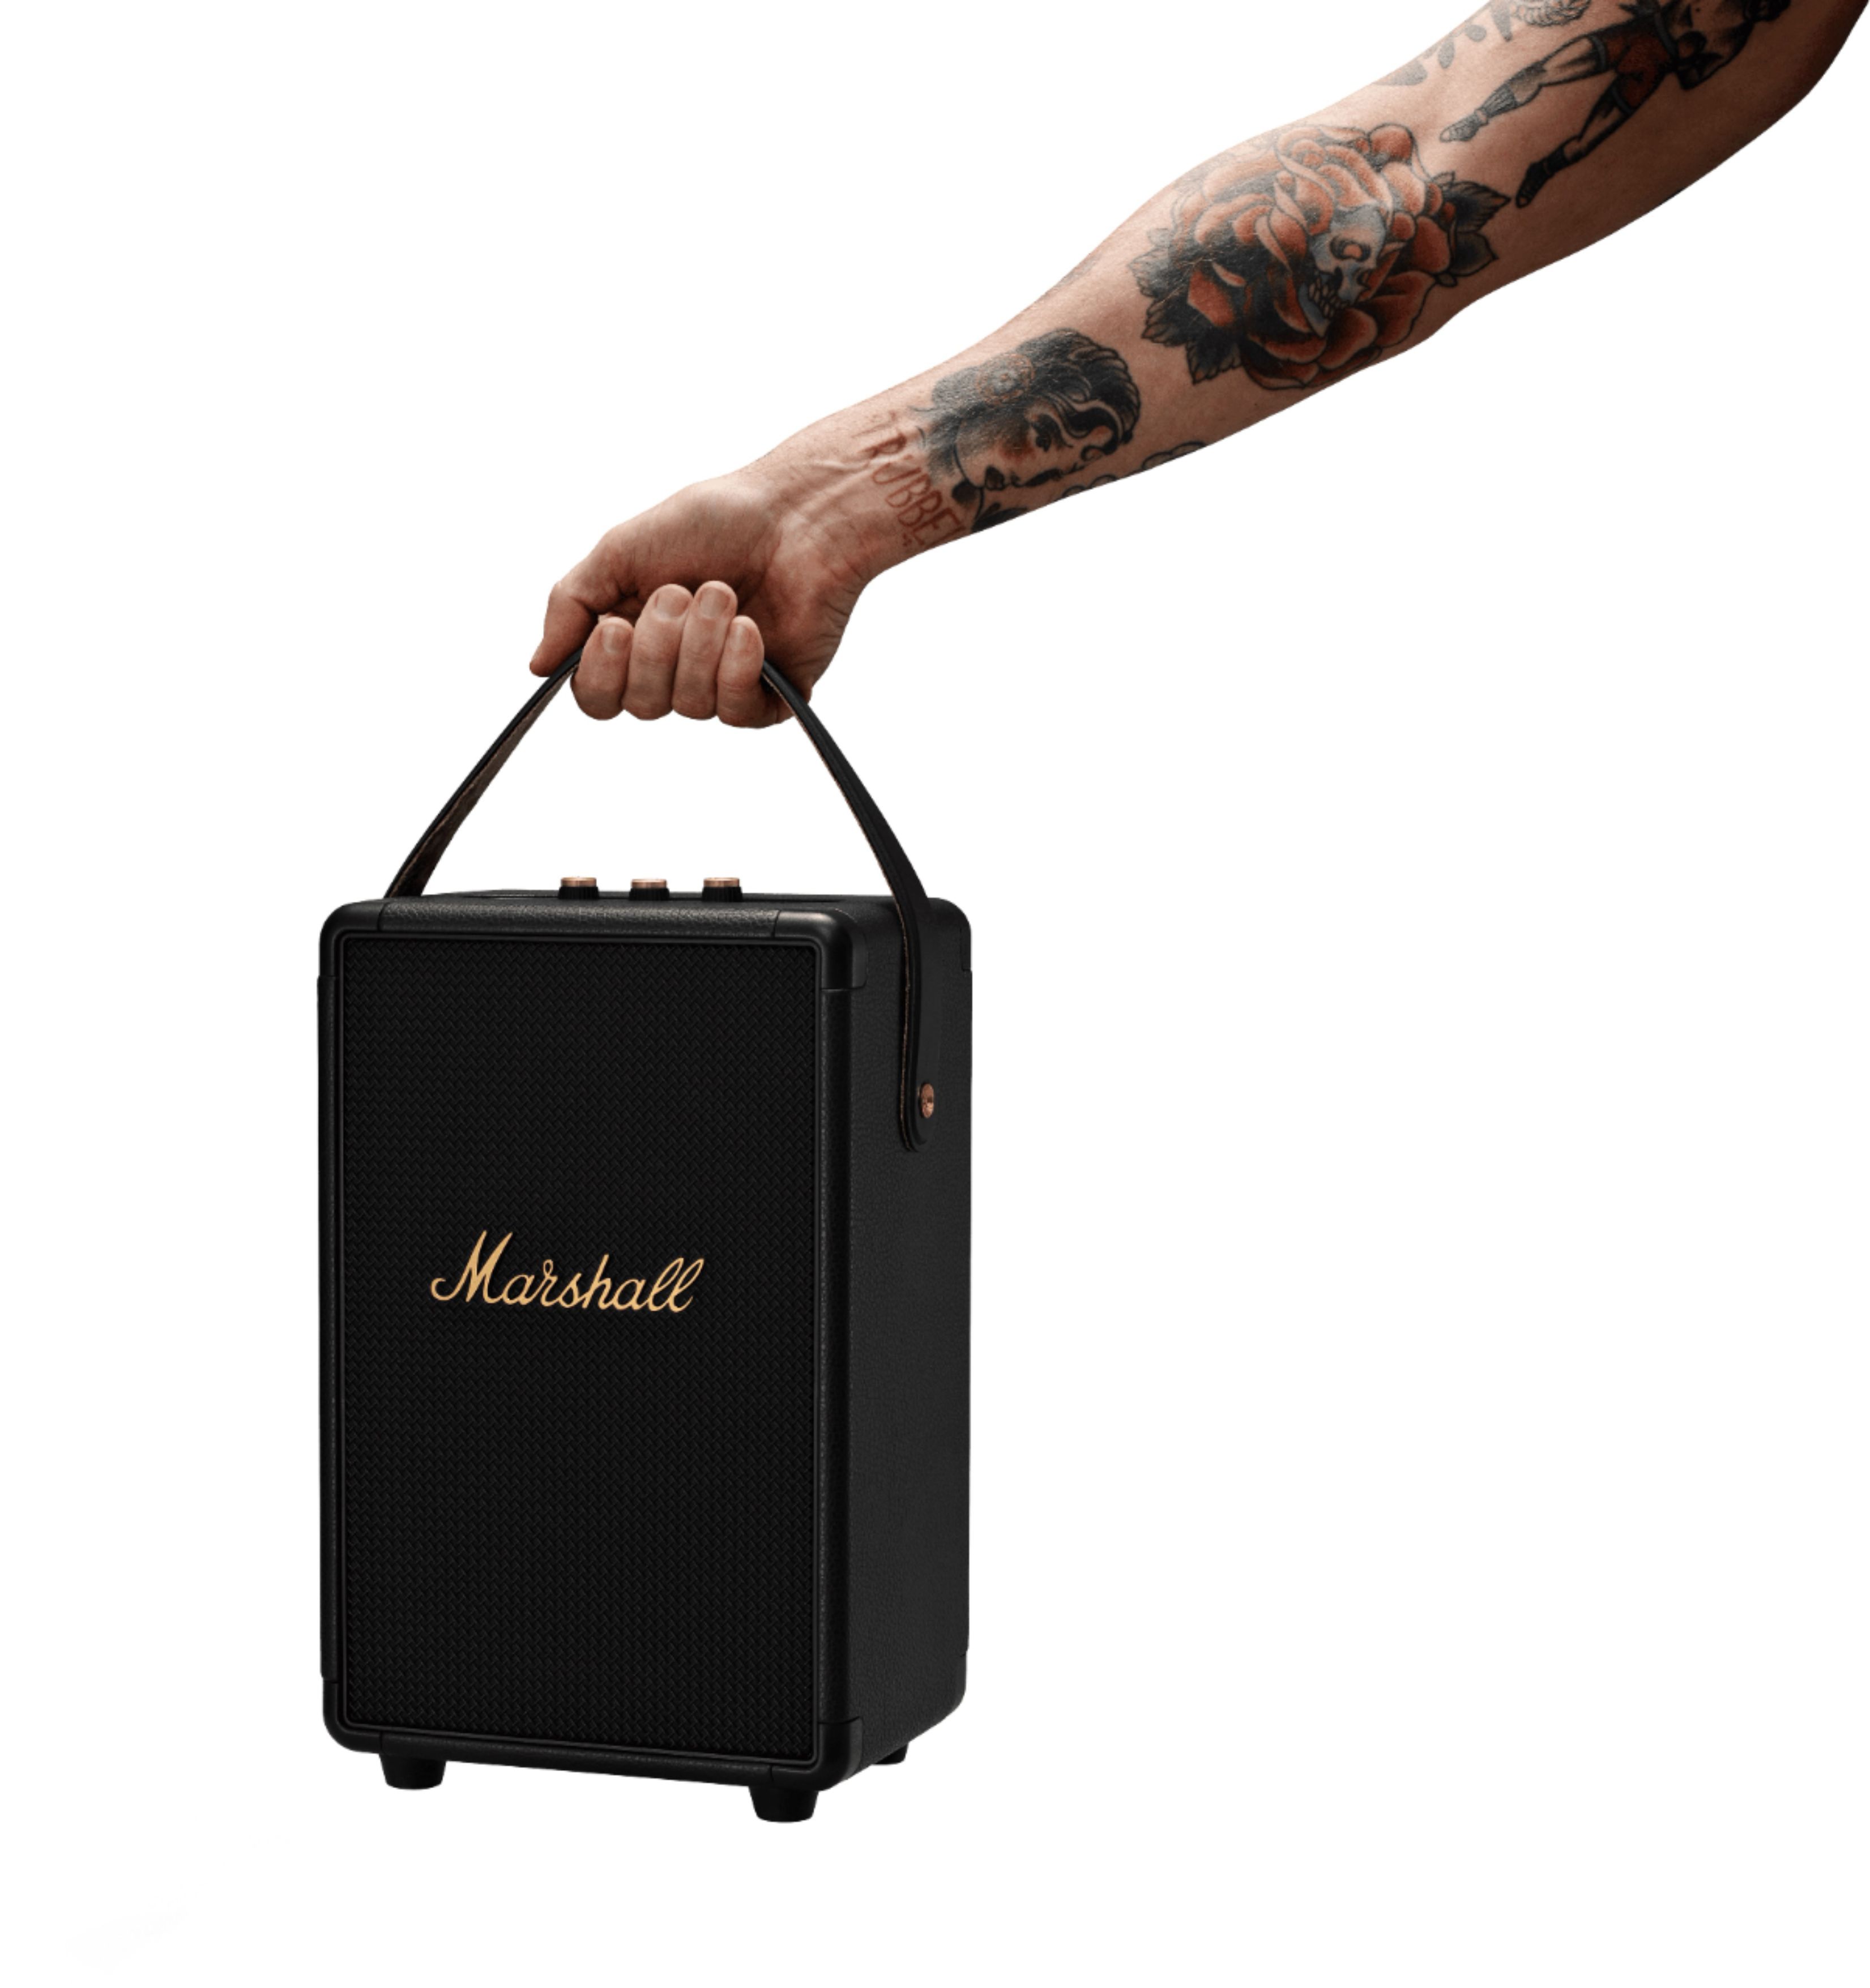 Buy 1006118 Marshall - Black Speaker & Portable Brass Bluetooth Tufton Best